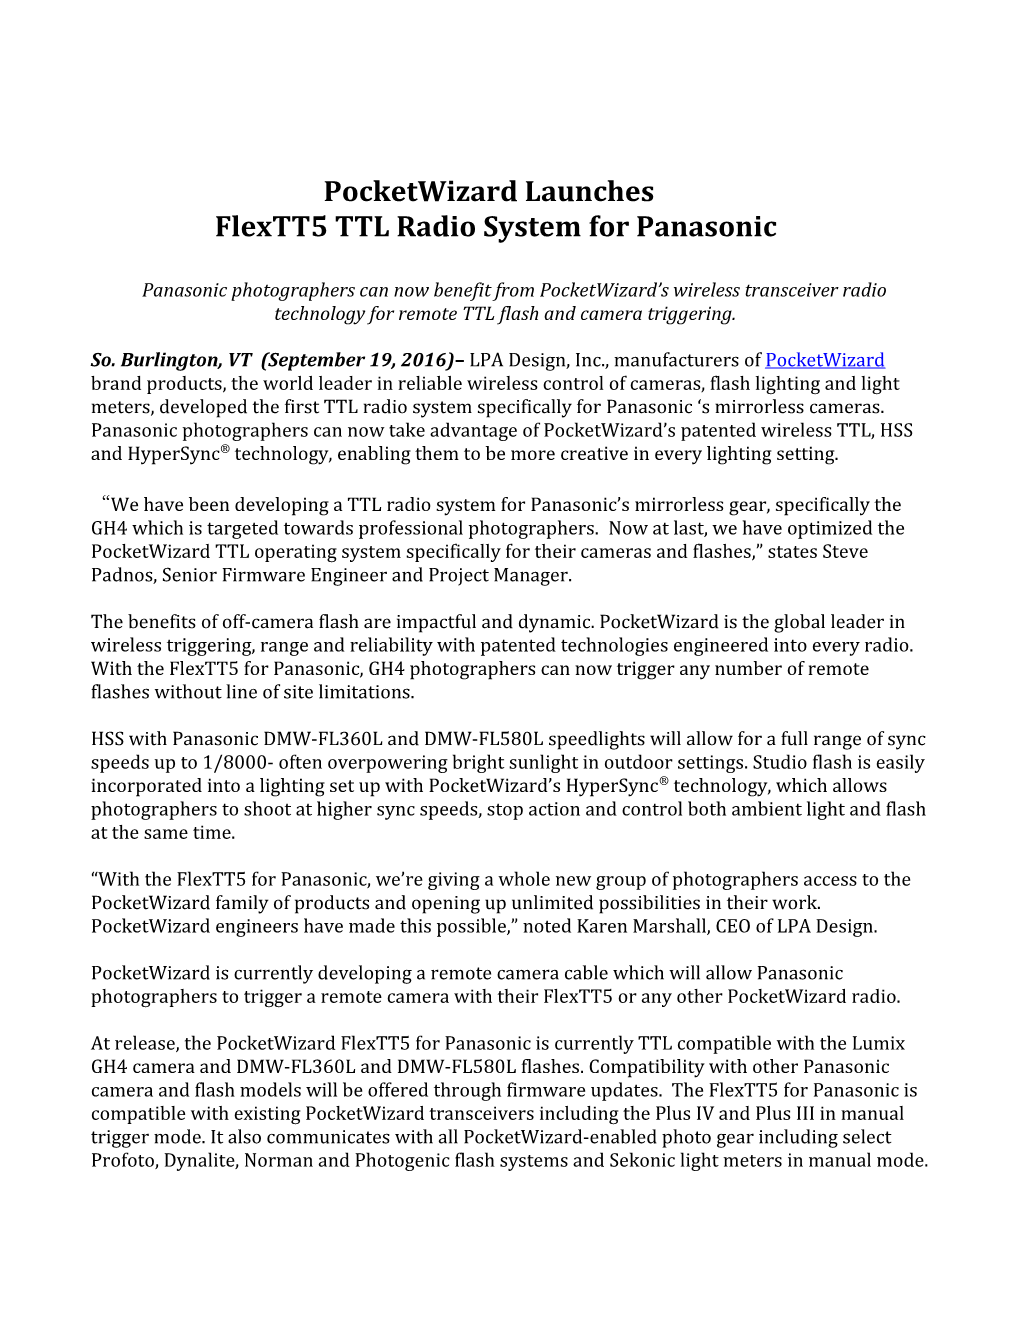 Pocketwizard Flex TT5 for Panasonic